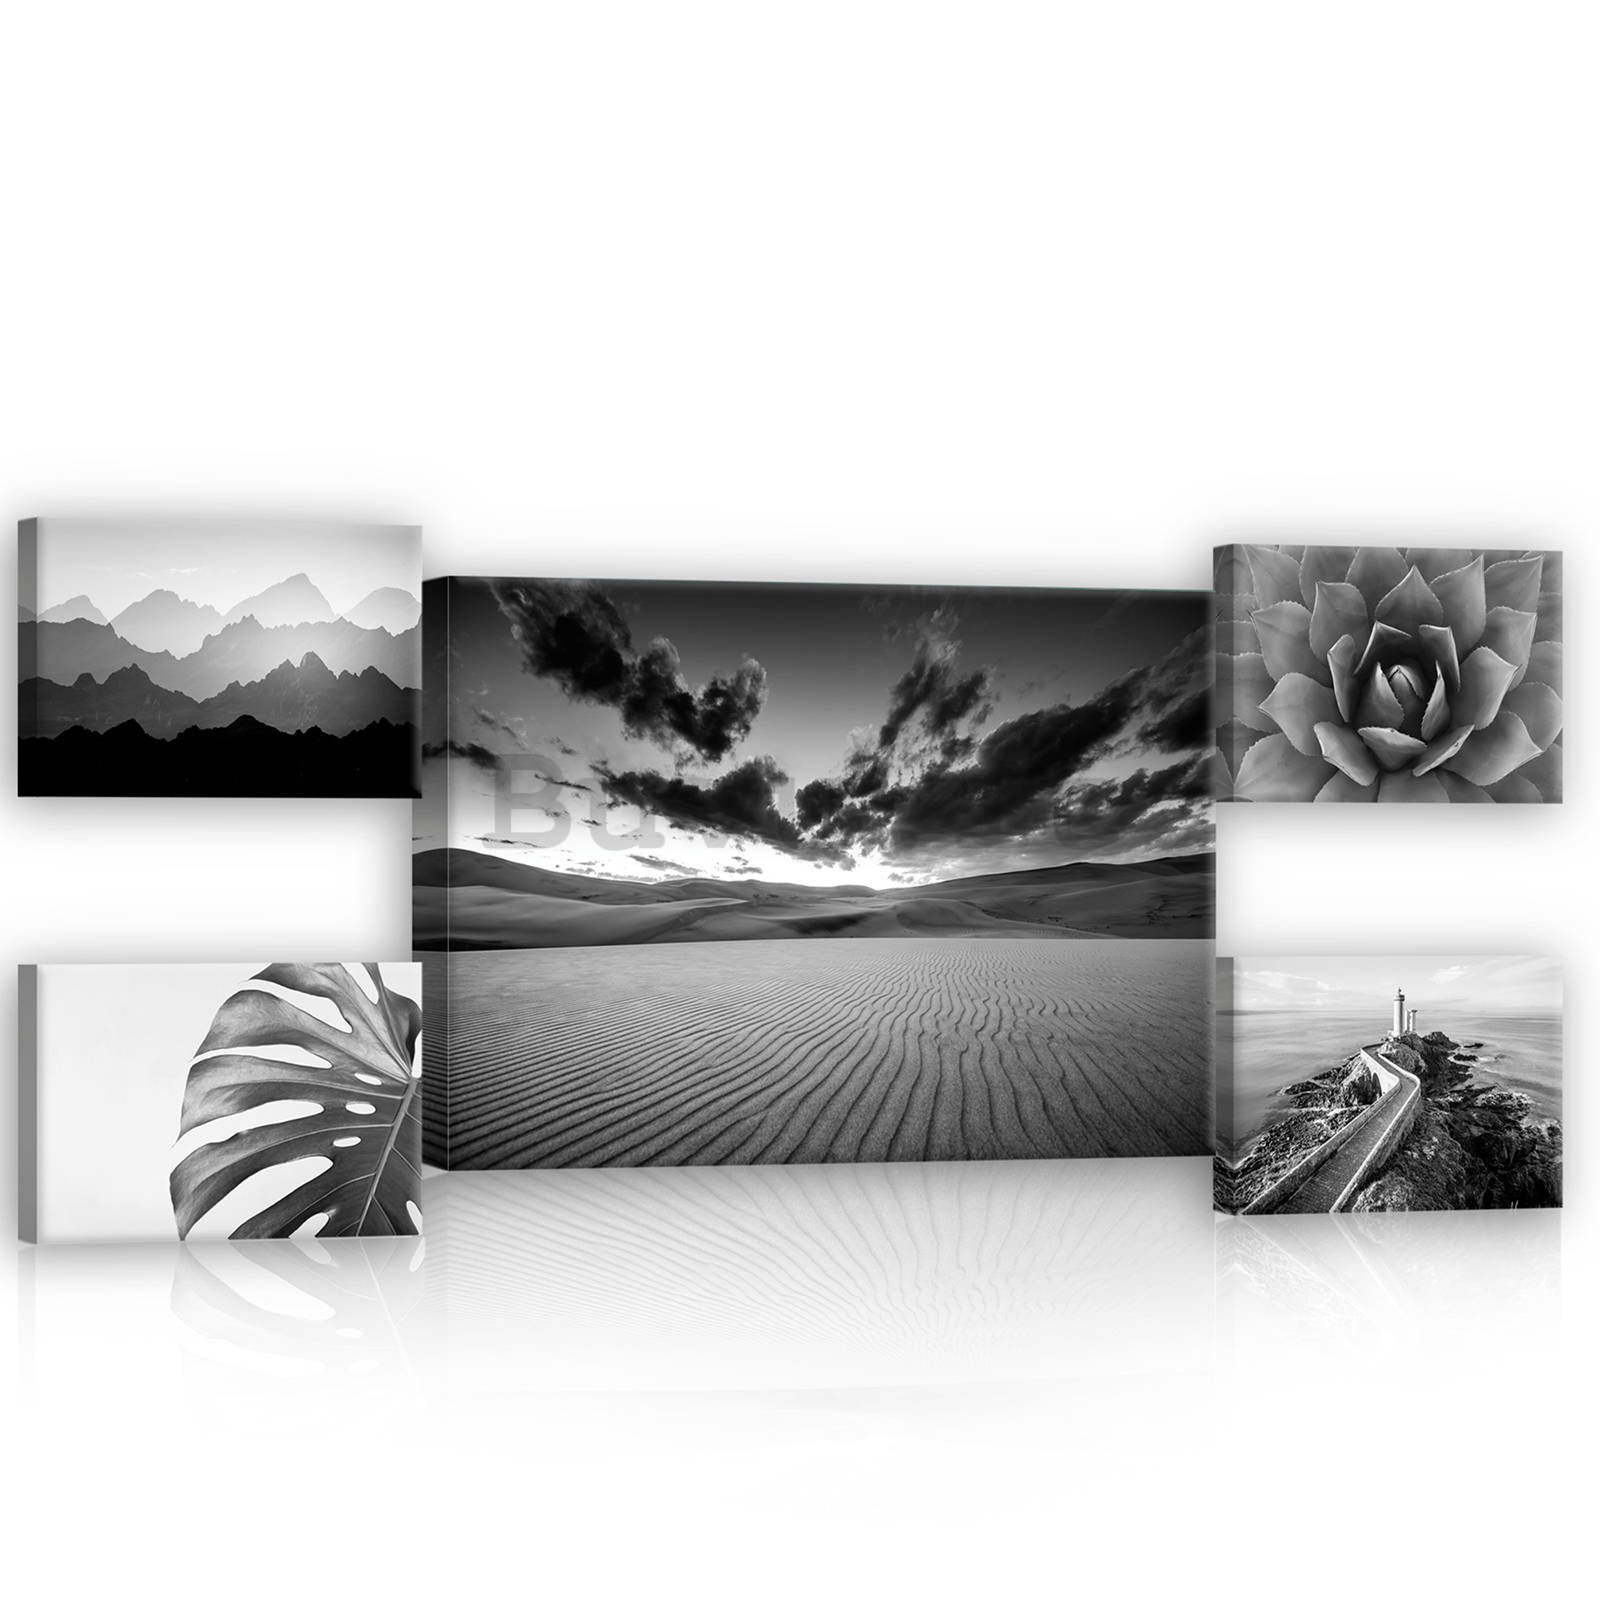 Quadro su tela: Viste in bianco e nero (1) - set 1pz 70x50 cm e 4pz 32,4x22,8 cm